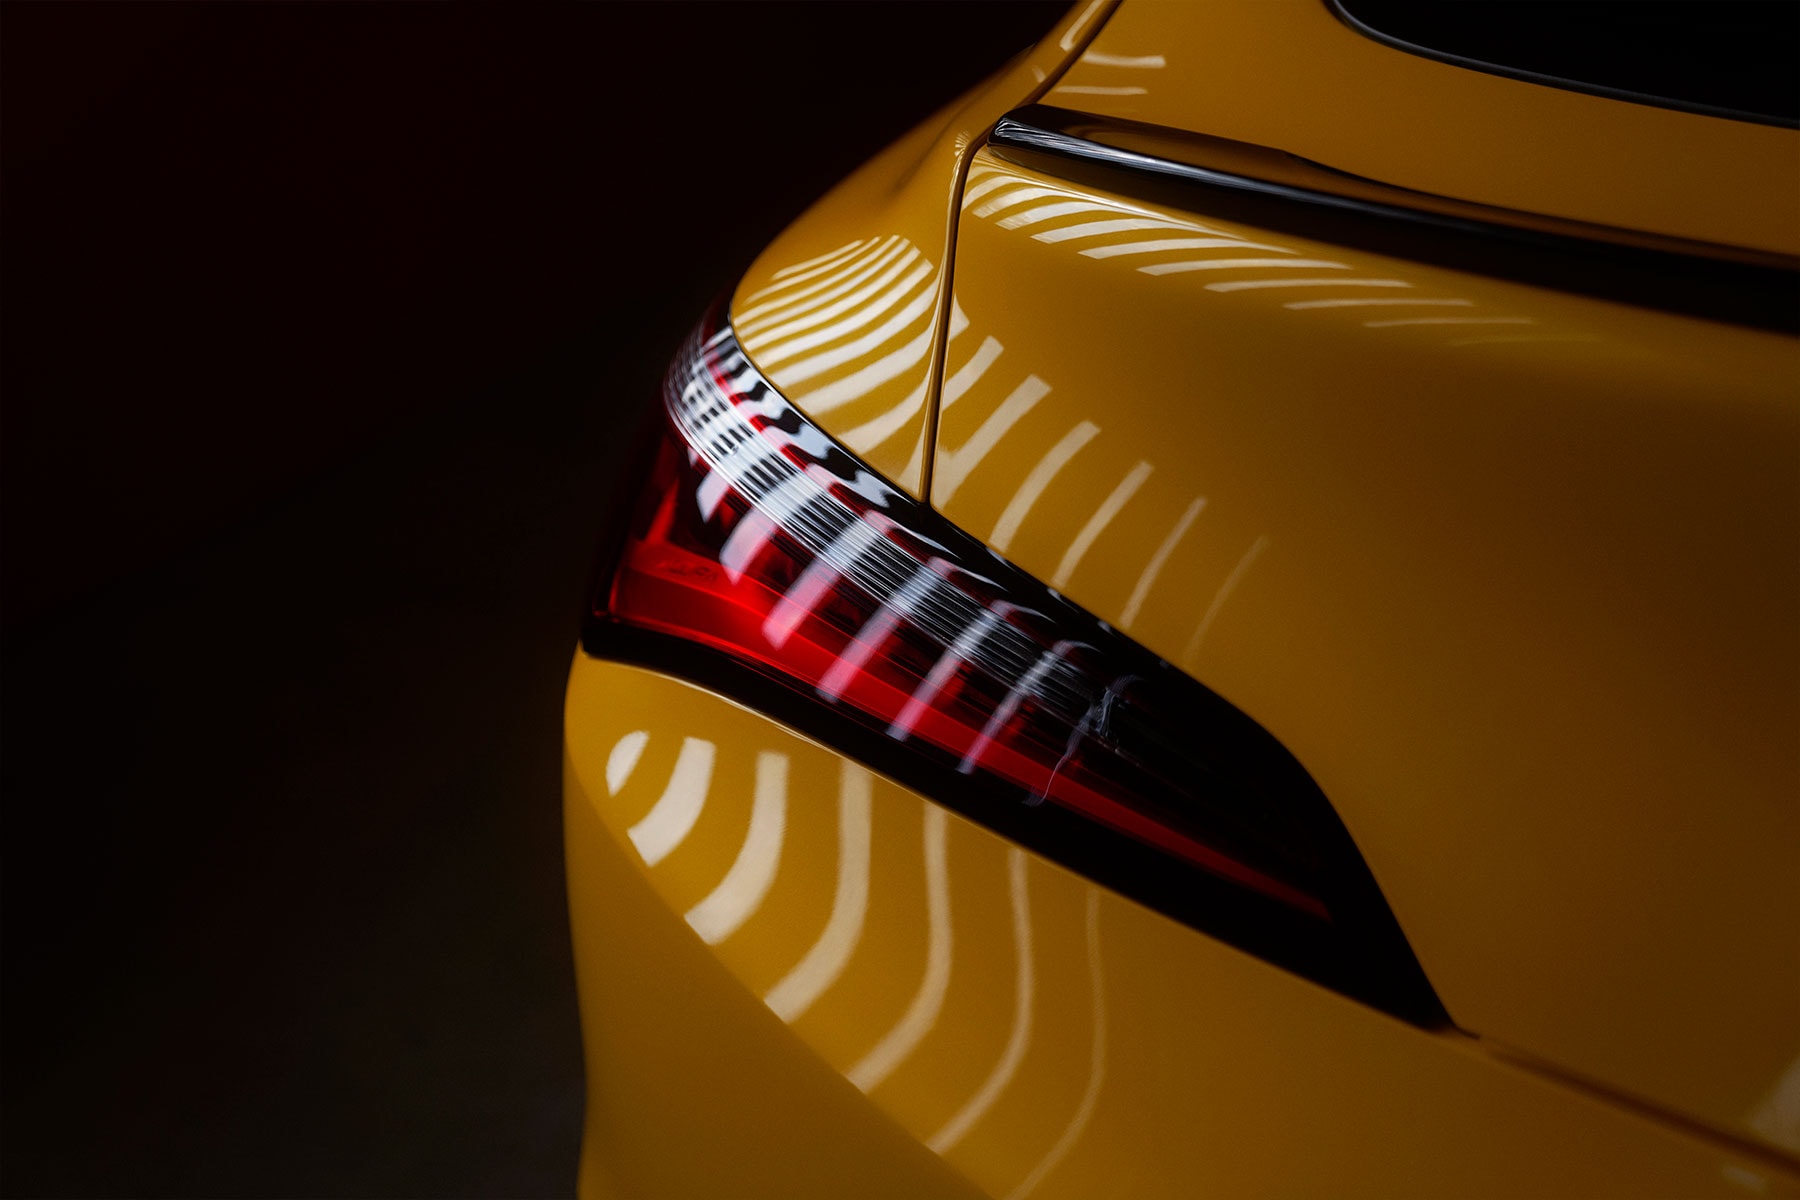 Acura 2023 Integra First Look DC2 Honda JDM RSX Indy Yellow Phoenix Yellow sports cars automotive 